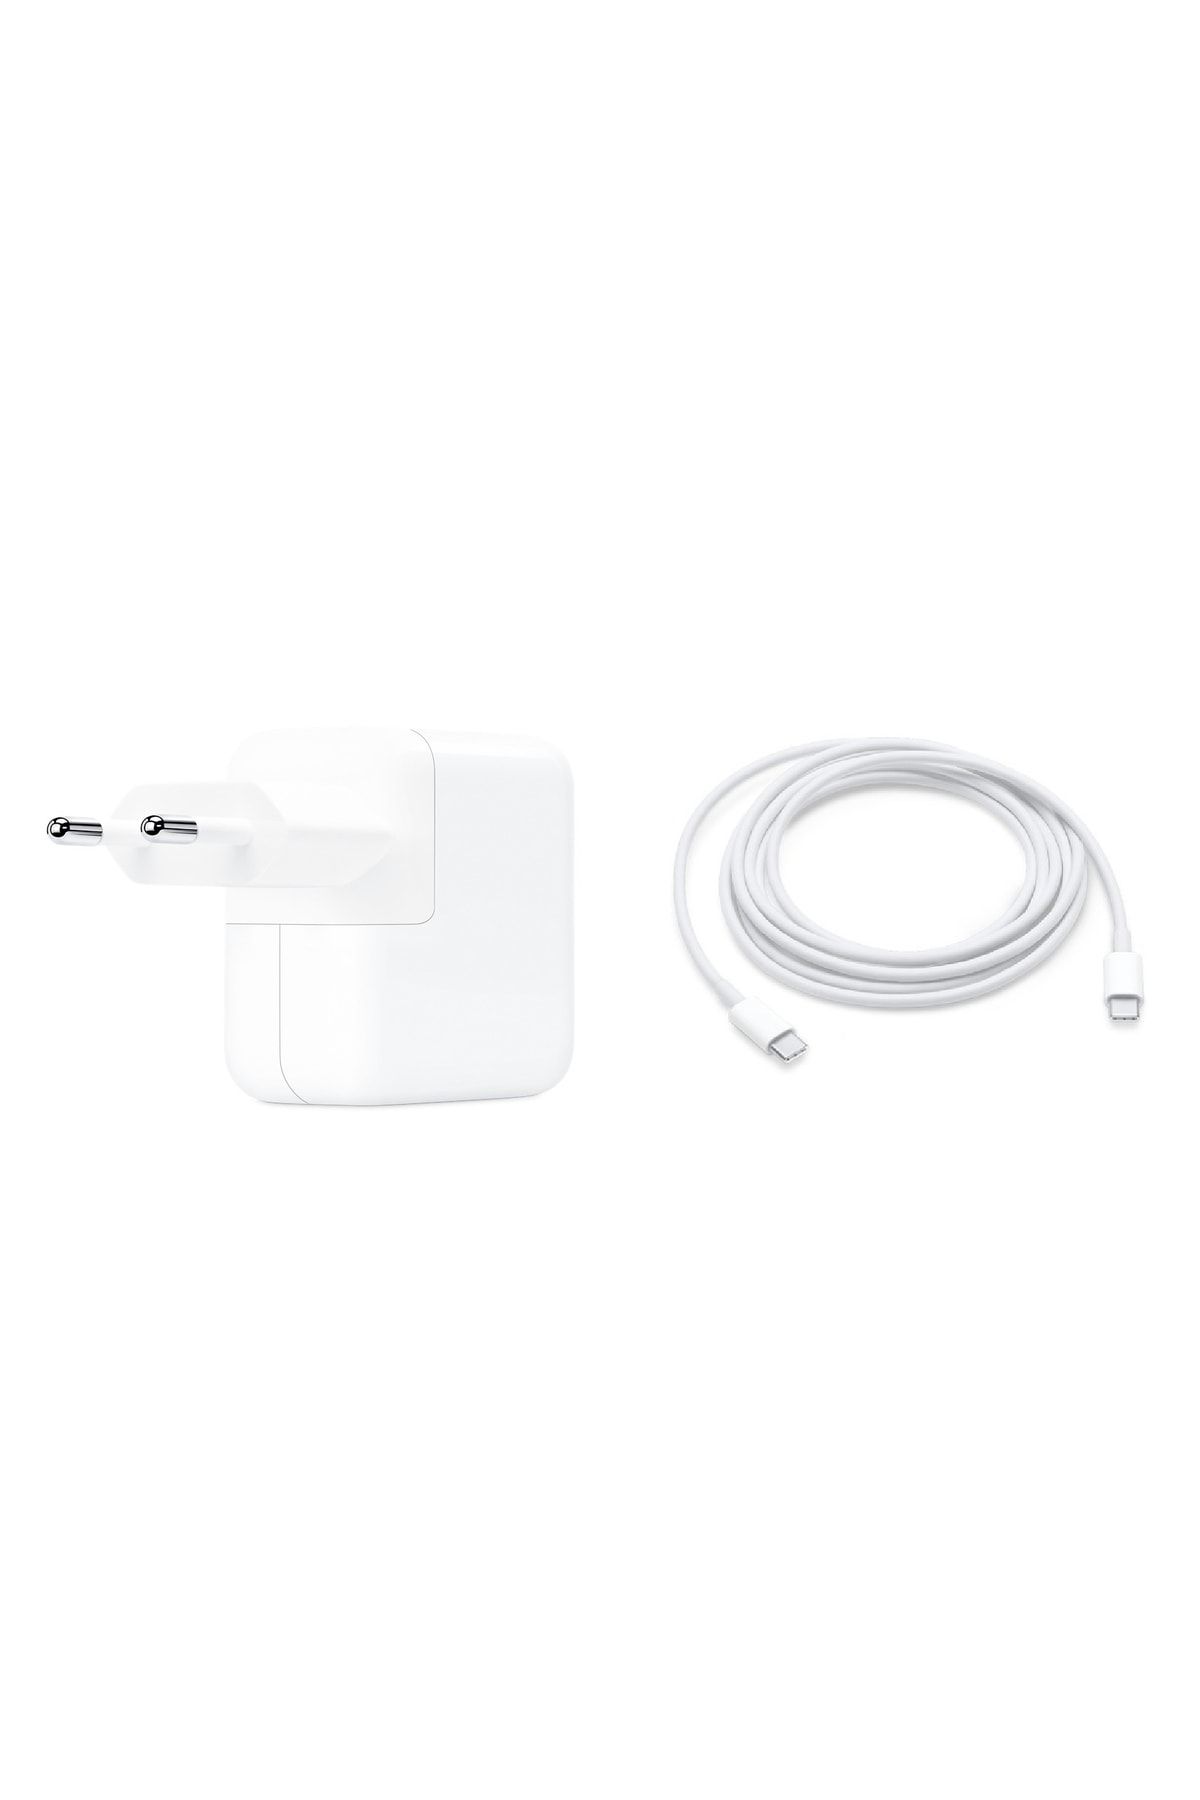 Apple 30 W Usb-c Güç Adaptörü - My1w2tu/a + Usb Type-c To Usb-c Şarj Kablosu - 2m - Mll82zm/a Seti